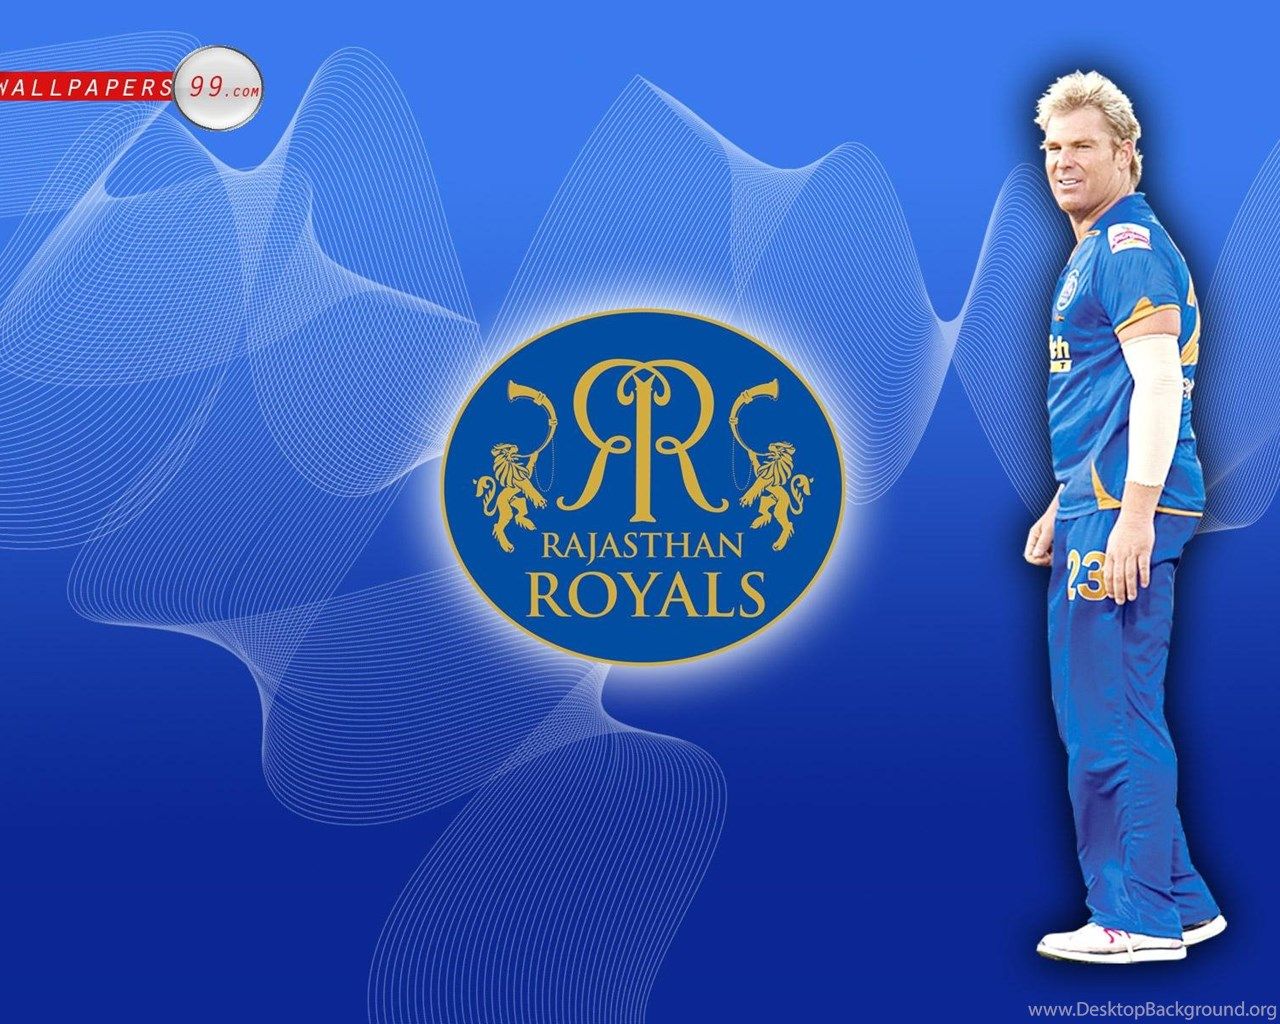 Rajasthan Royals Season 3 Wallpaper Picture Image 1600x1200 24318 Desktop Background